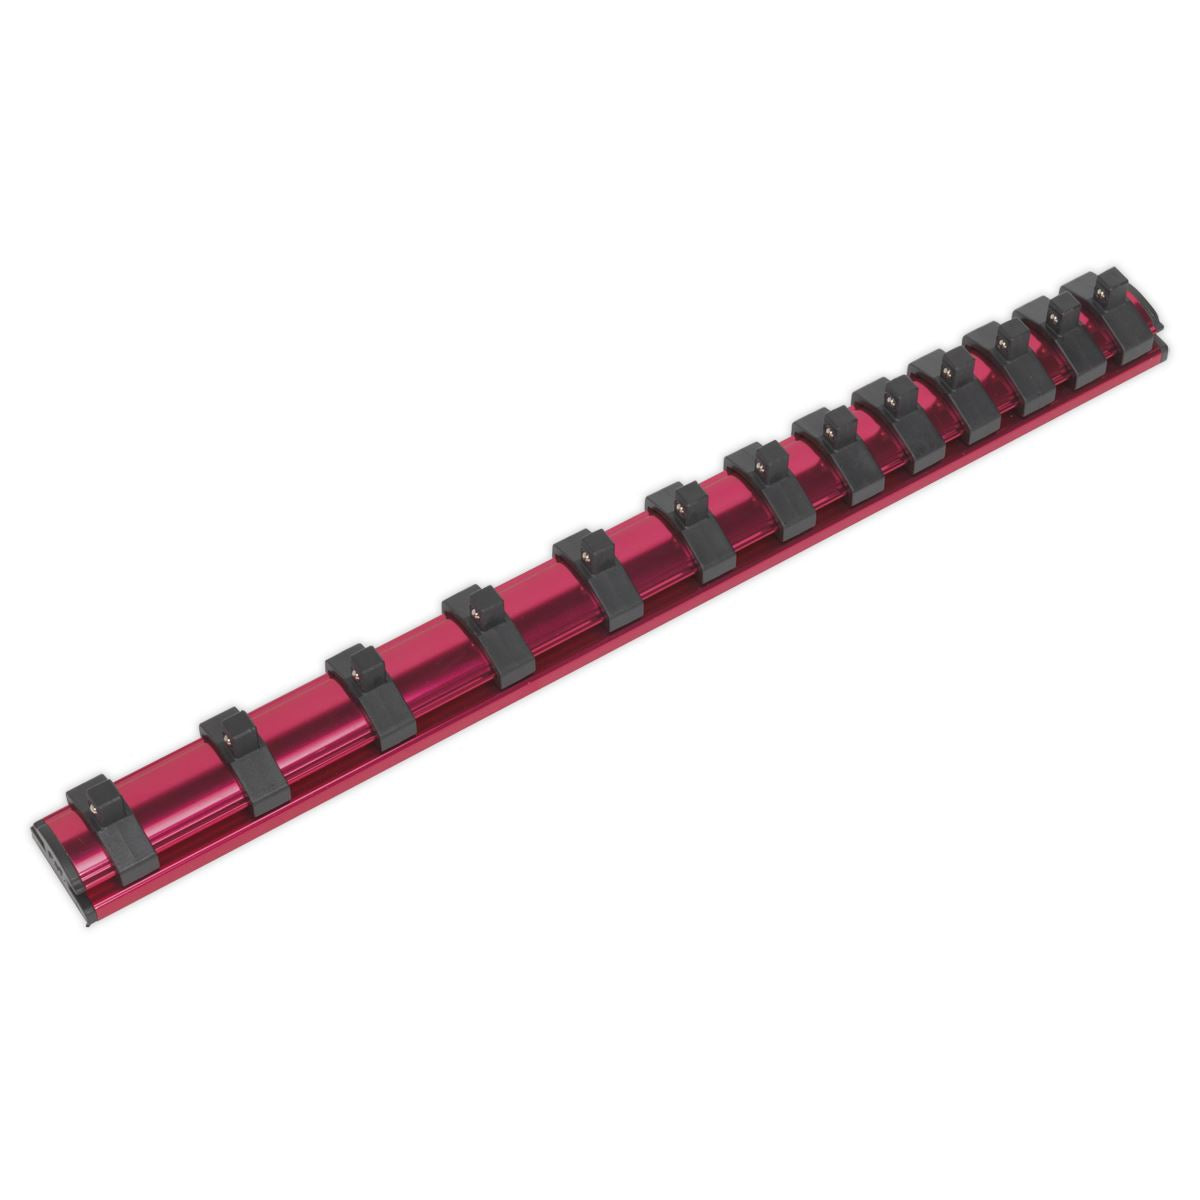 Sealey Premier Socket Retaining Rail Magnetic 1/4"Sq Drive 13 Clips